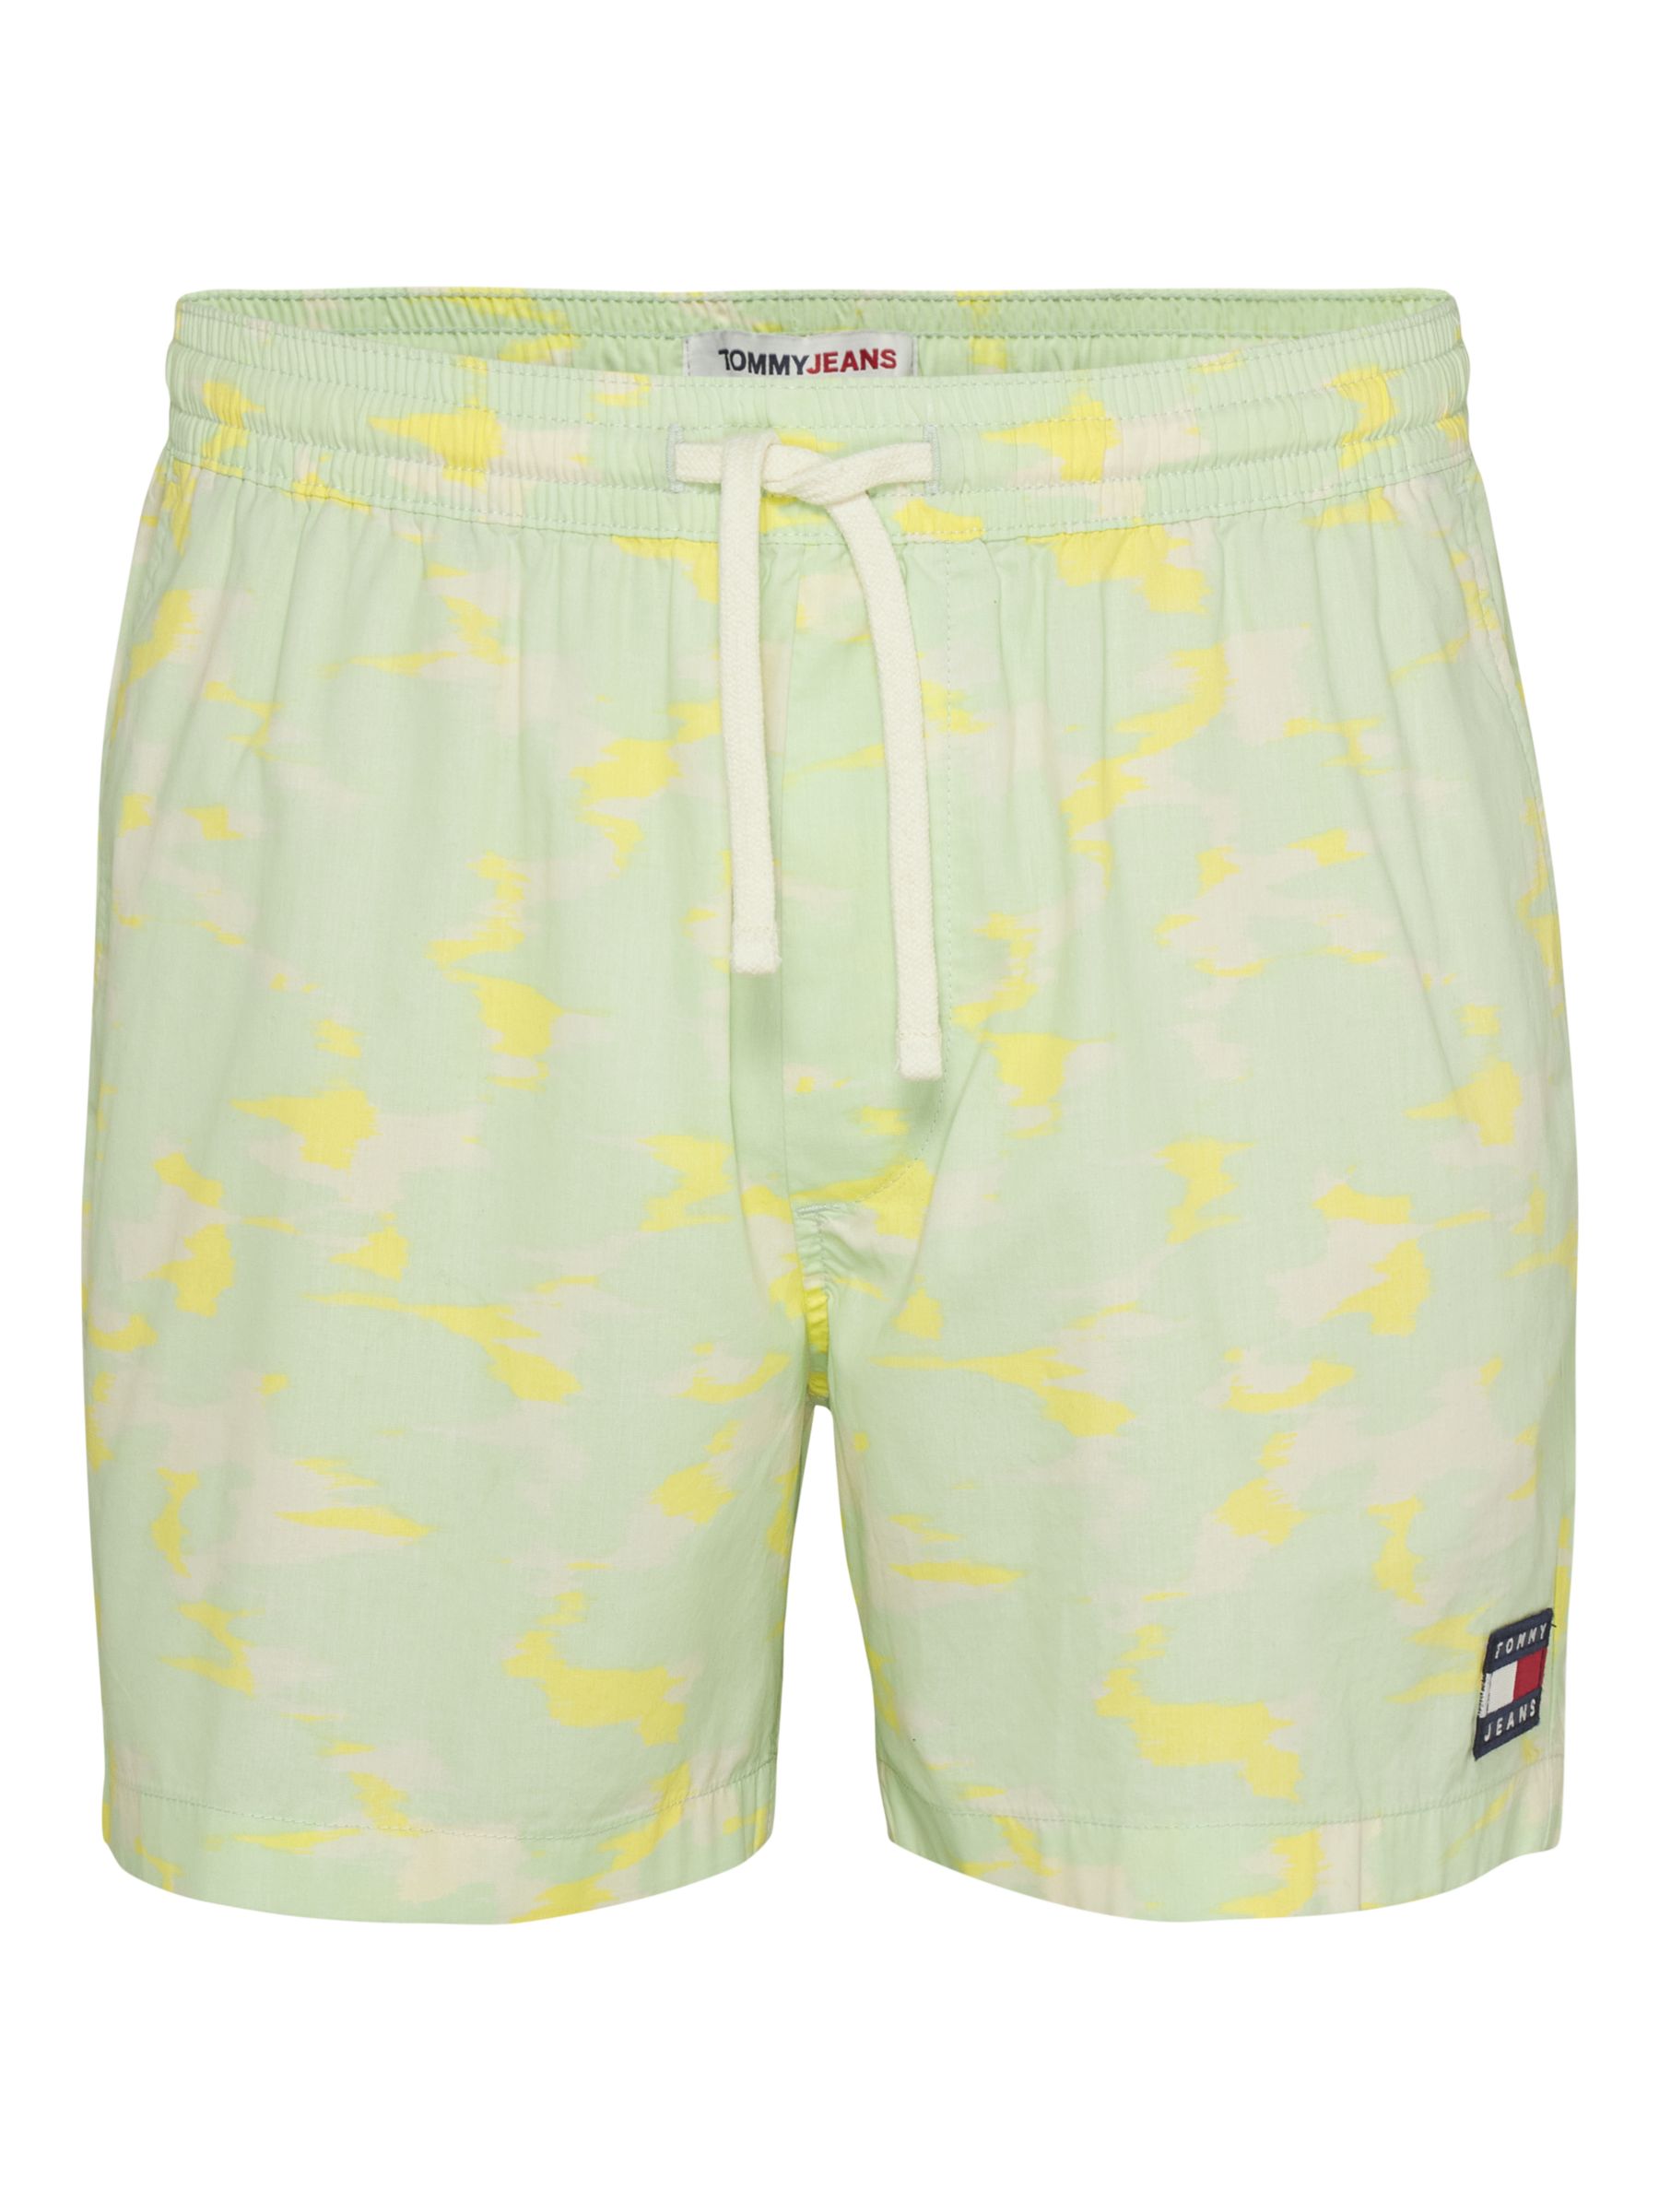 Buy Tommy Hilfiger Camo Print Beach Shorts, Camo/Multi Online at johnlewis.com